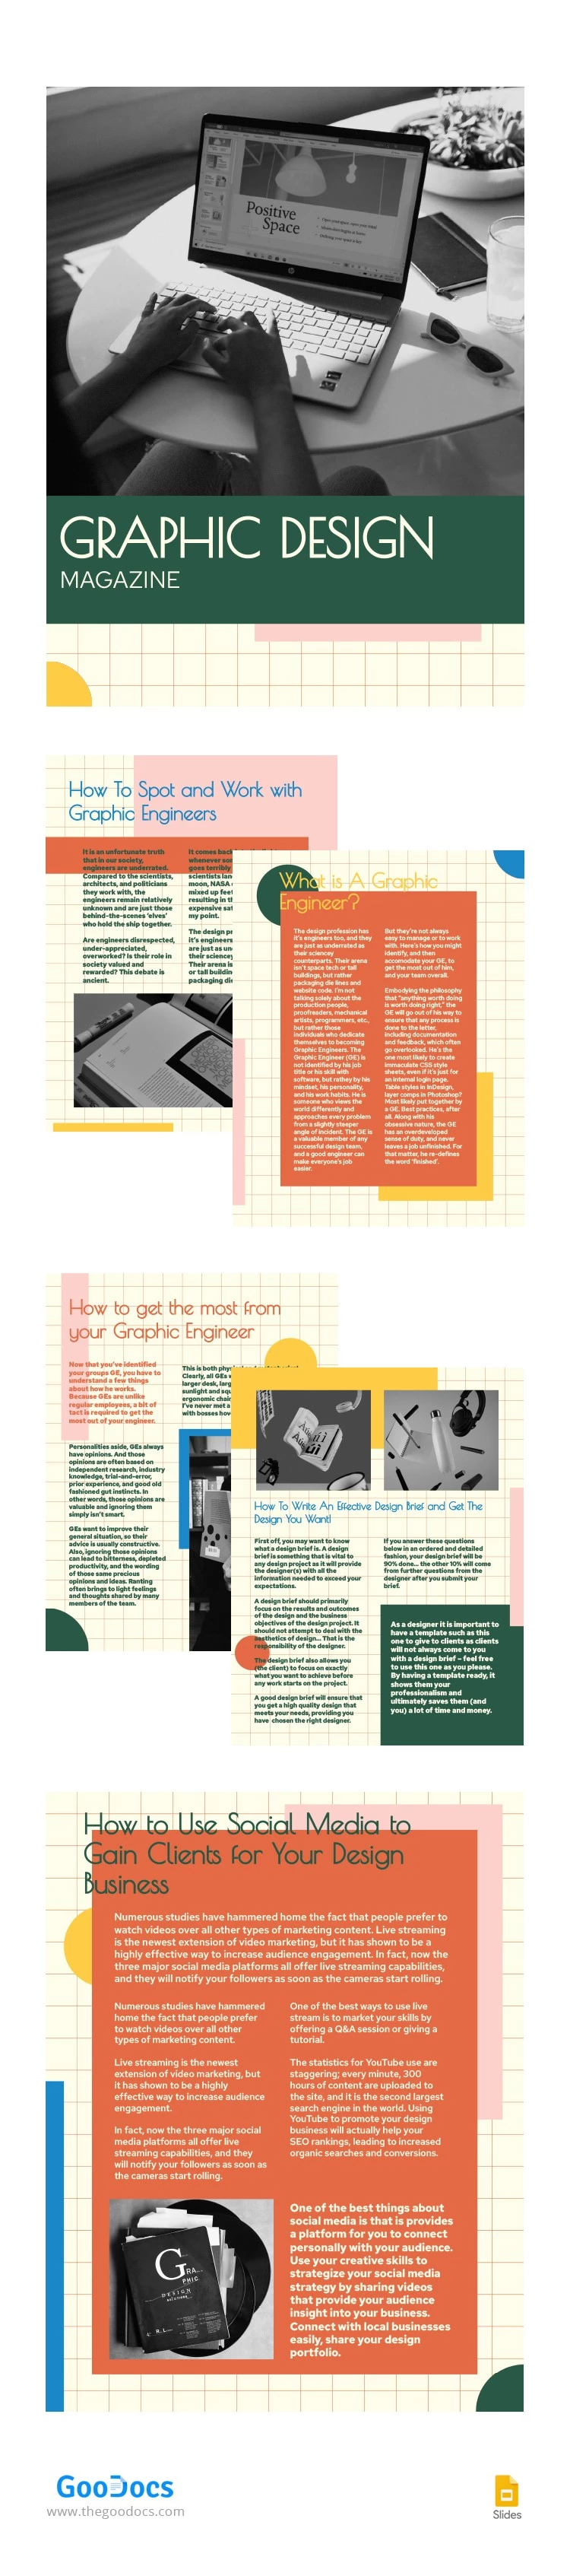 Magazine de design graphique - free Google Docs Template - 10064206